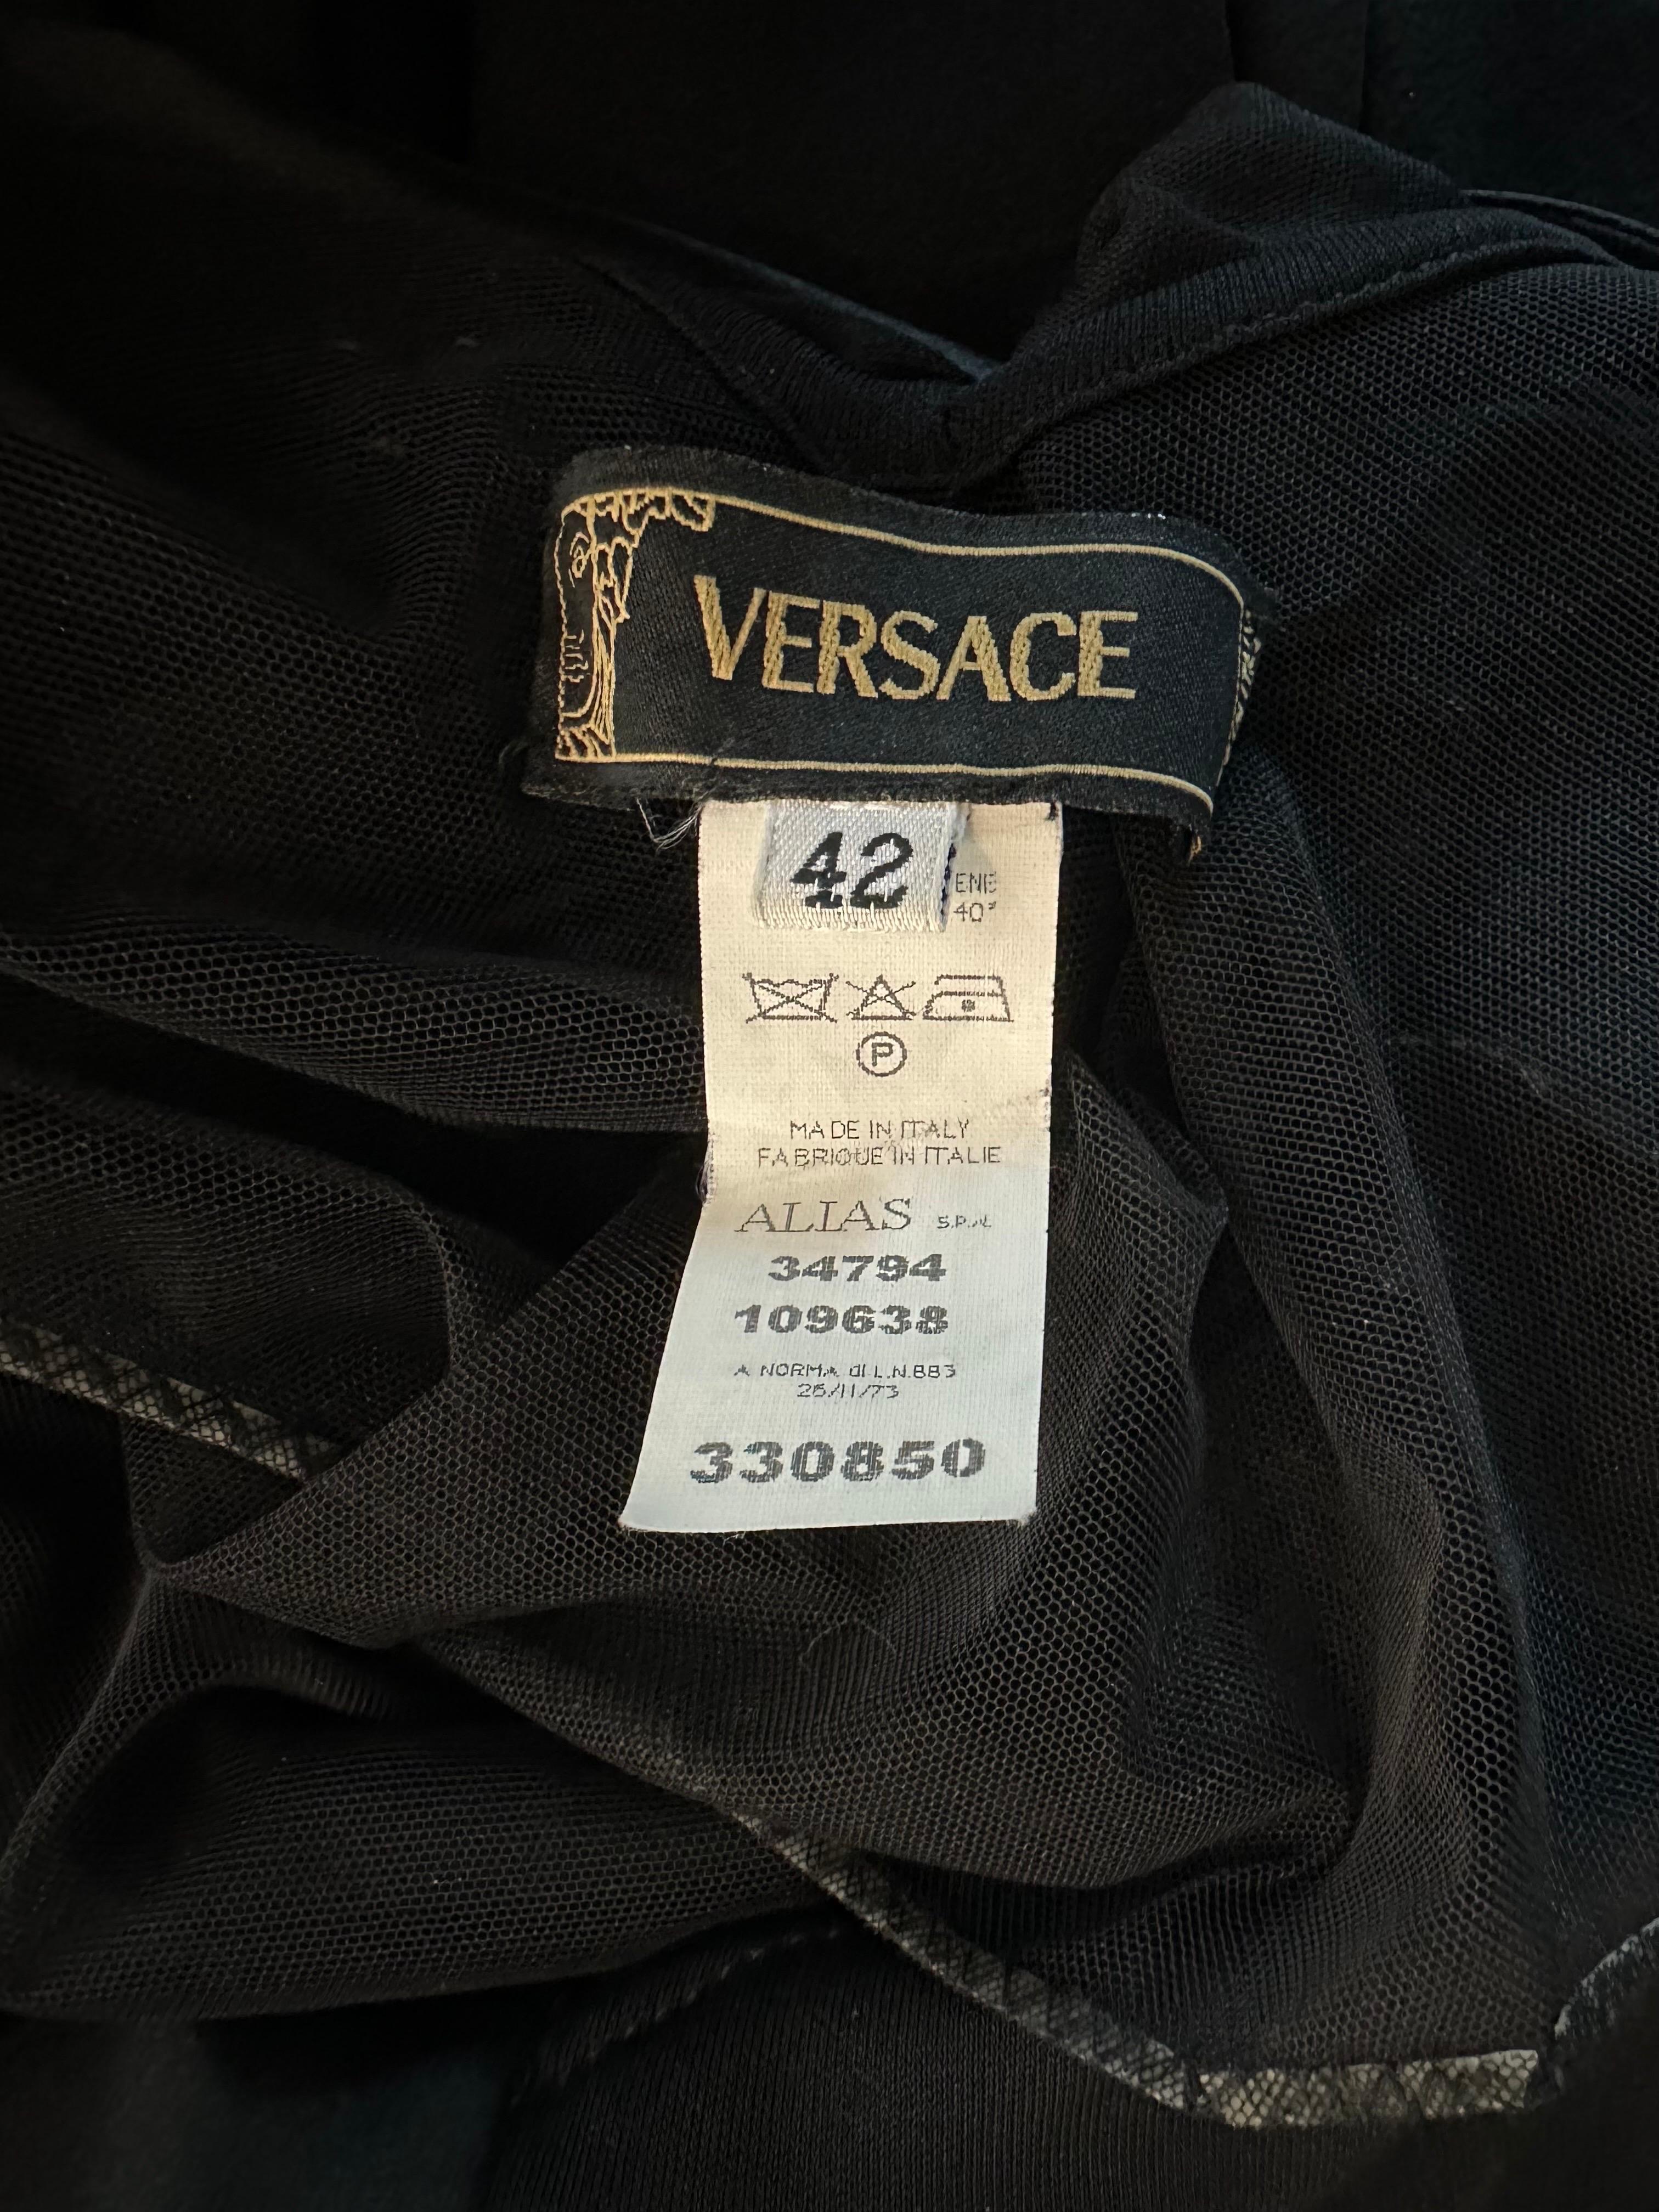 Versace S/S 2004 Plunged Halter Open Back Ruffles Black Evening Dress Gown  11